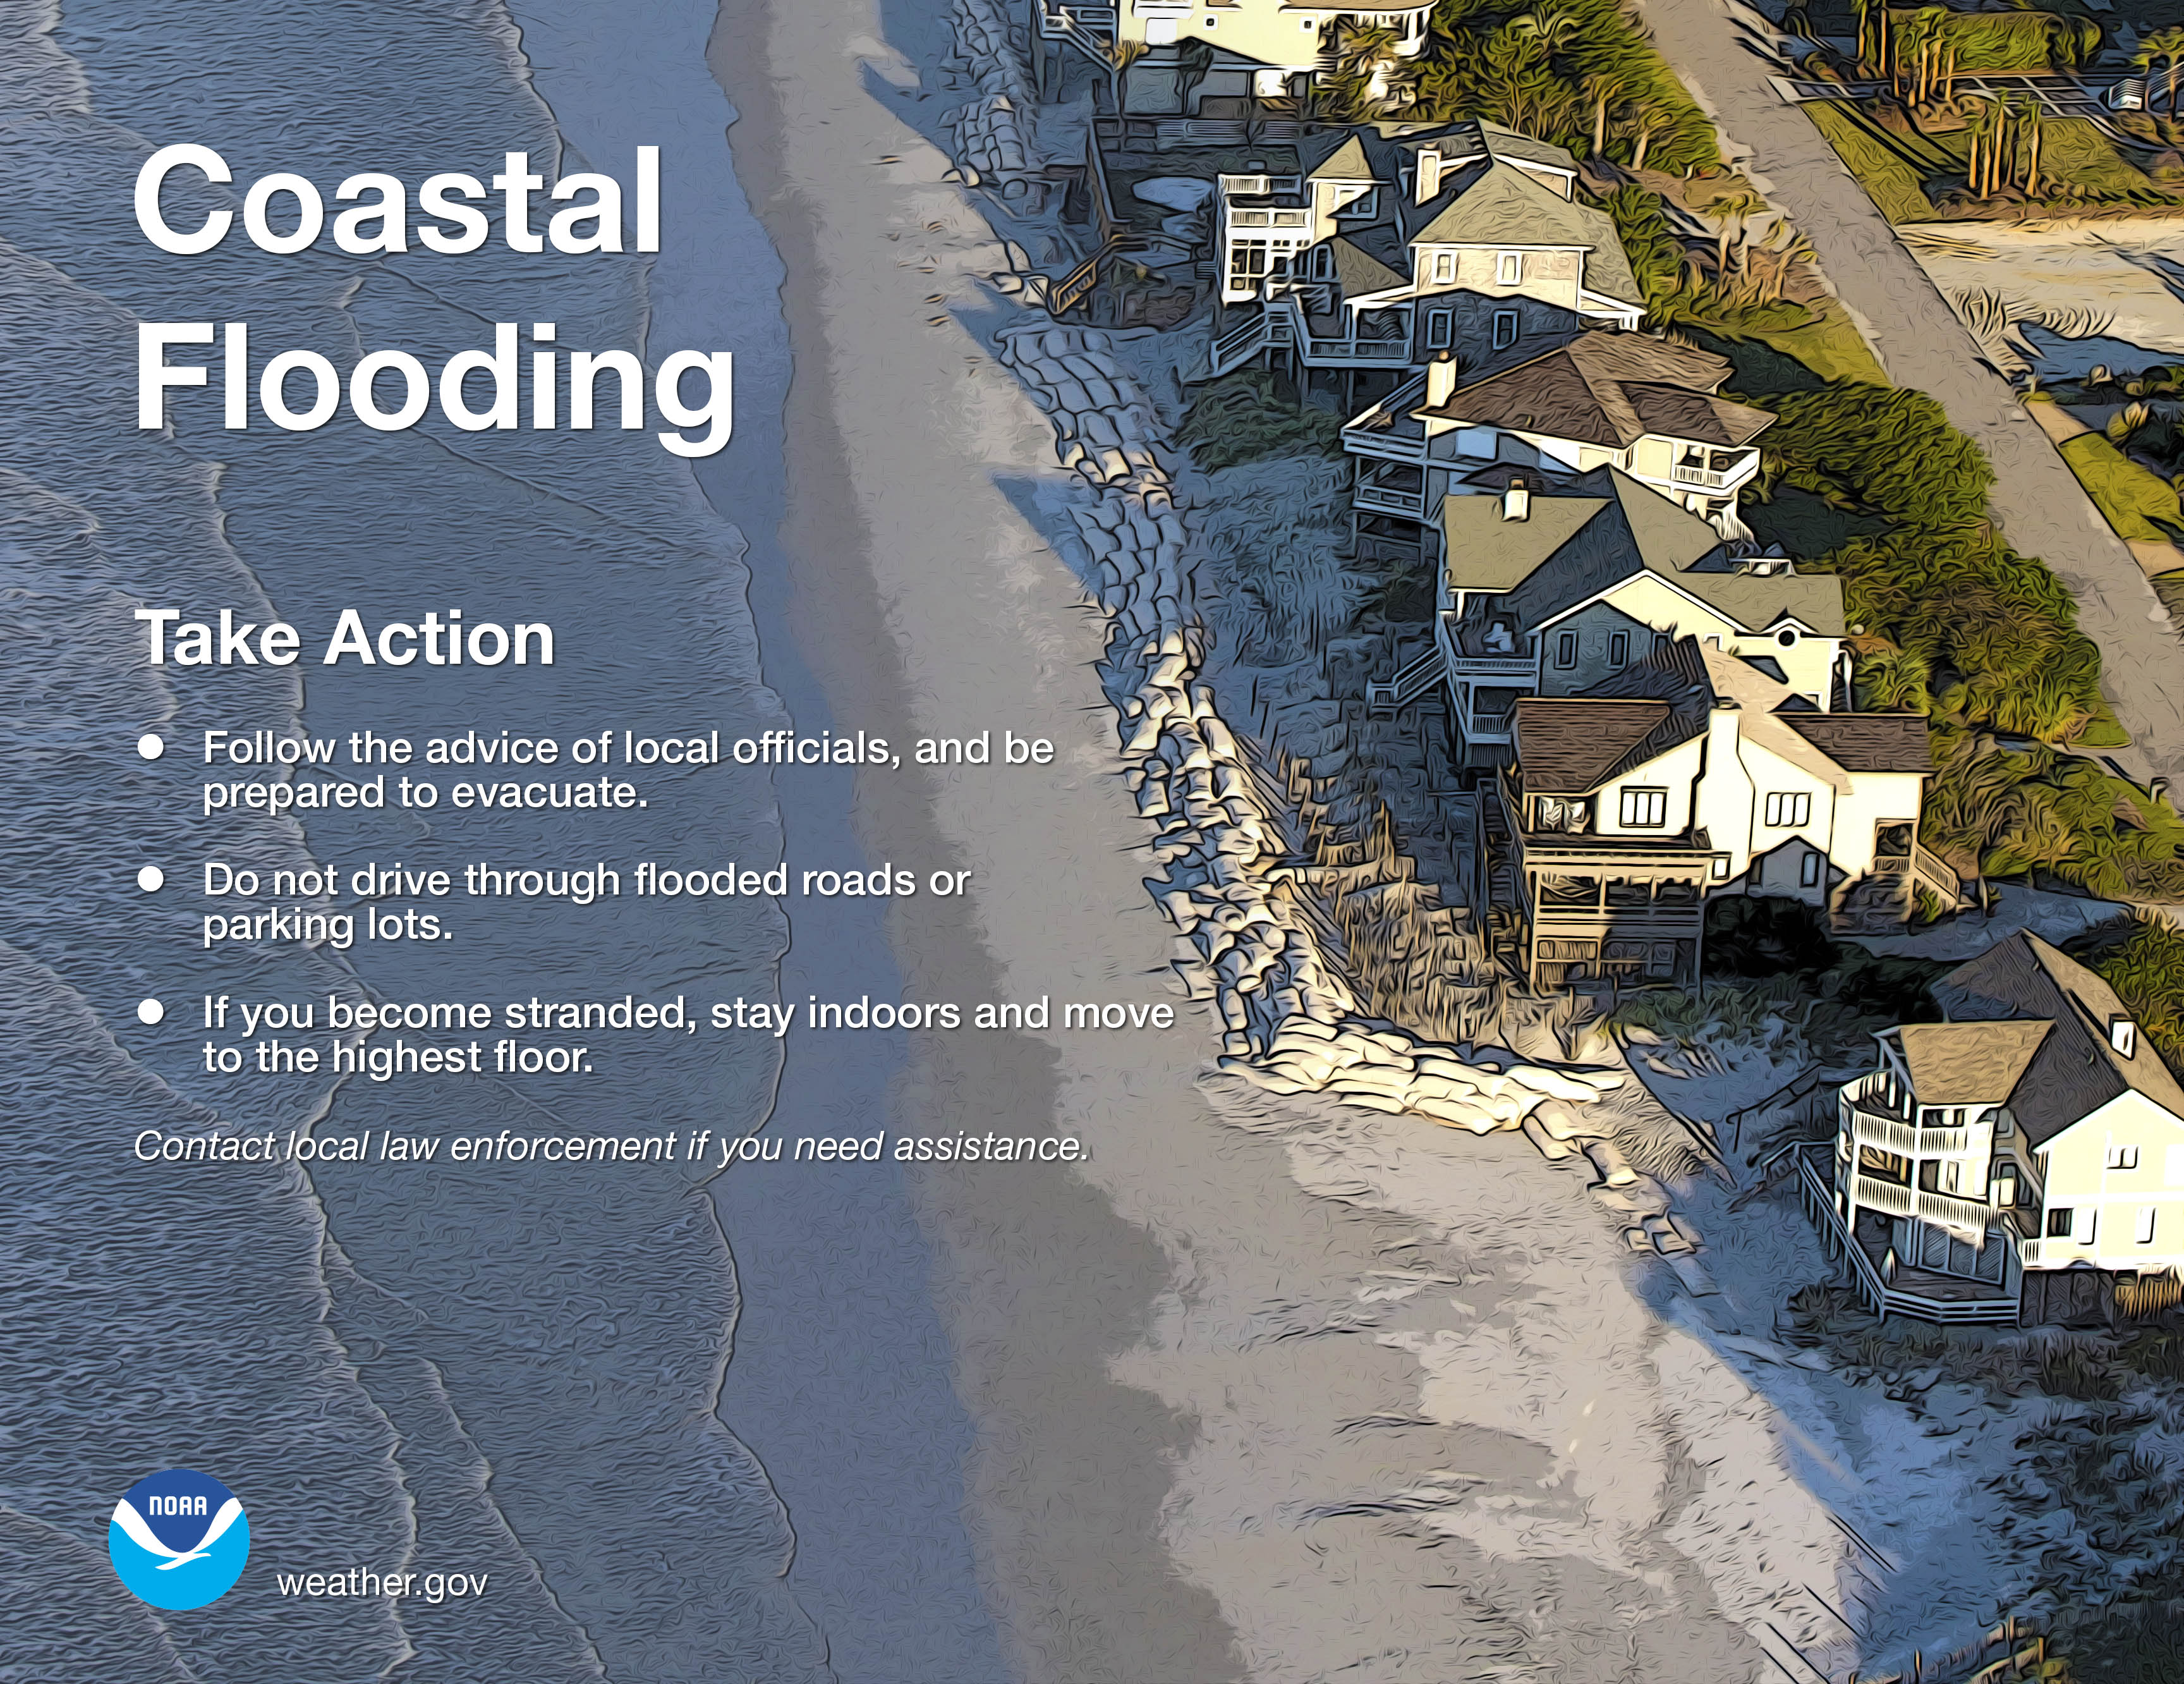 Coastal Flooding